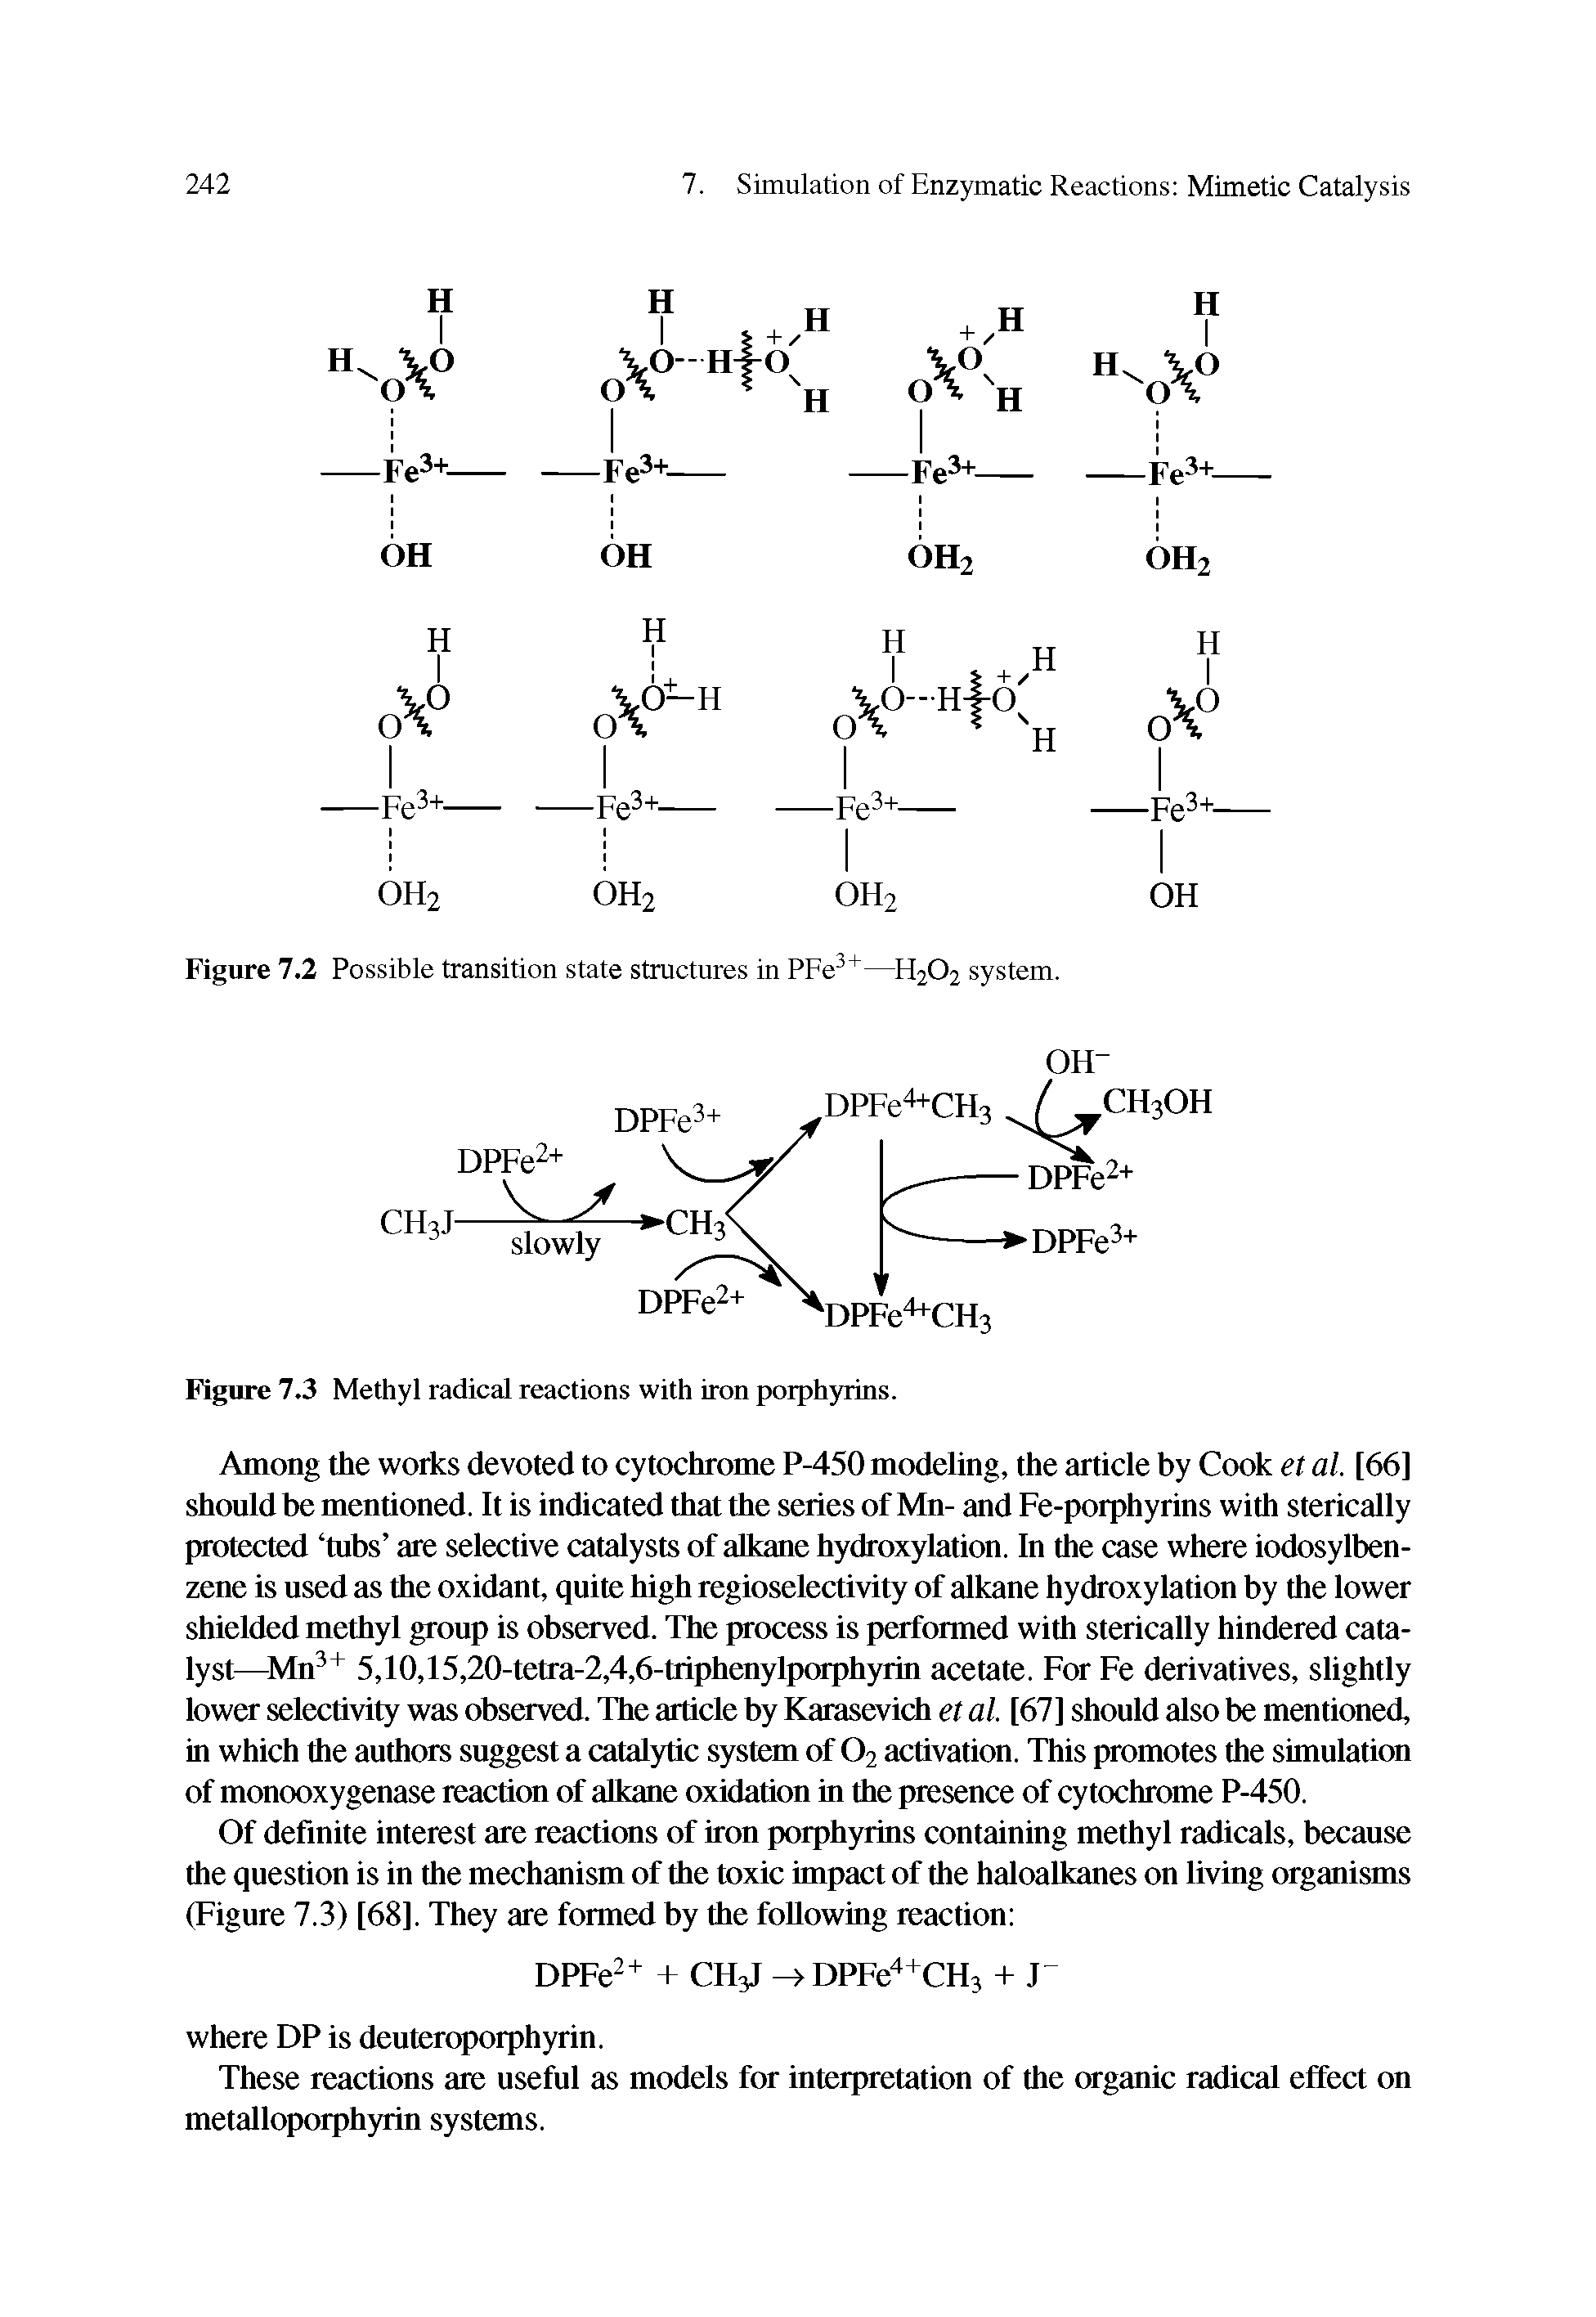 Figure 7.3 Methyl radical reactions with iron porphyrins.